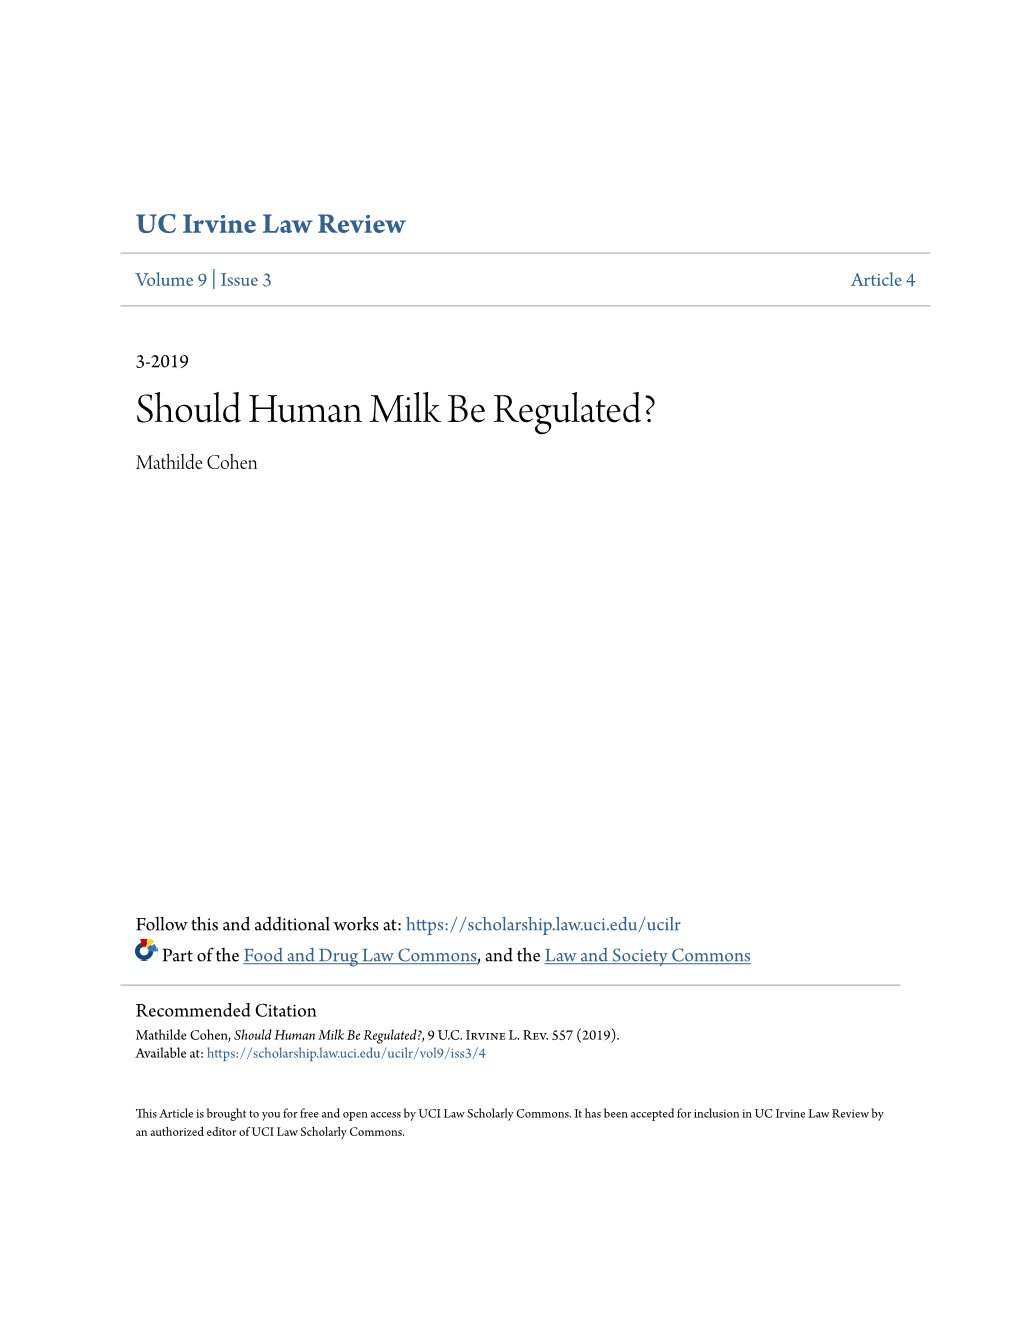 Should Human Milk Be Regulated? Mathilde Cohen